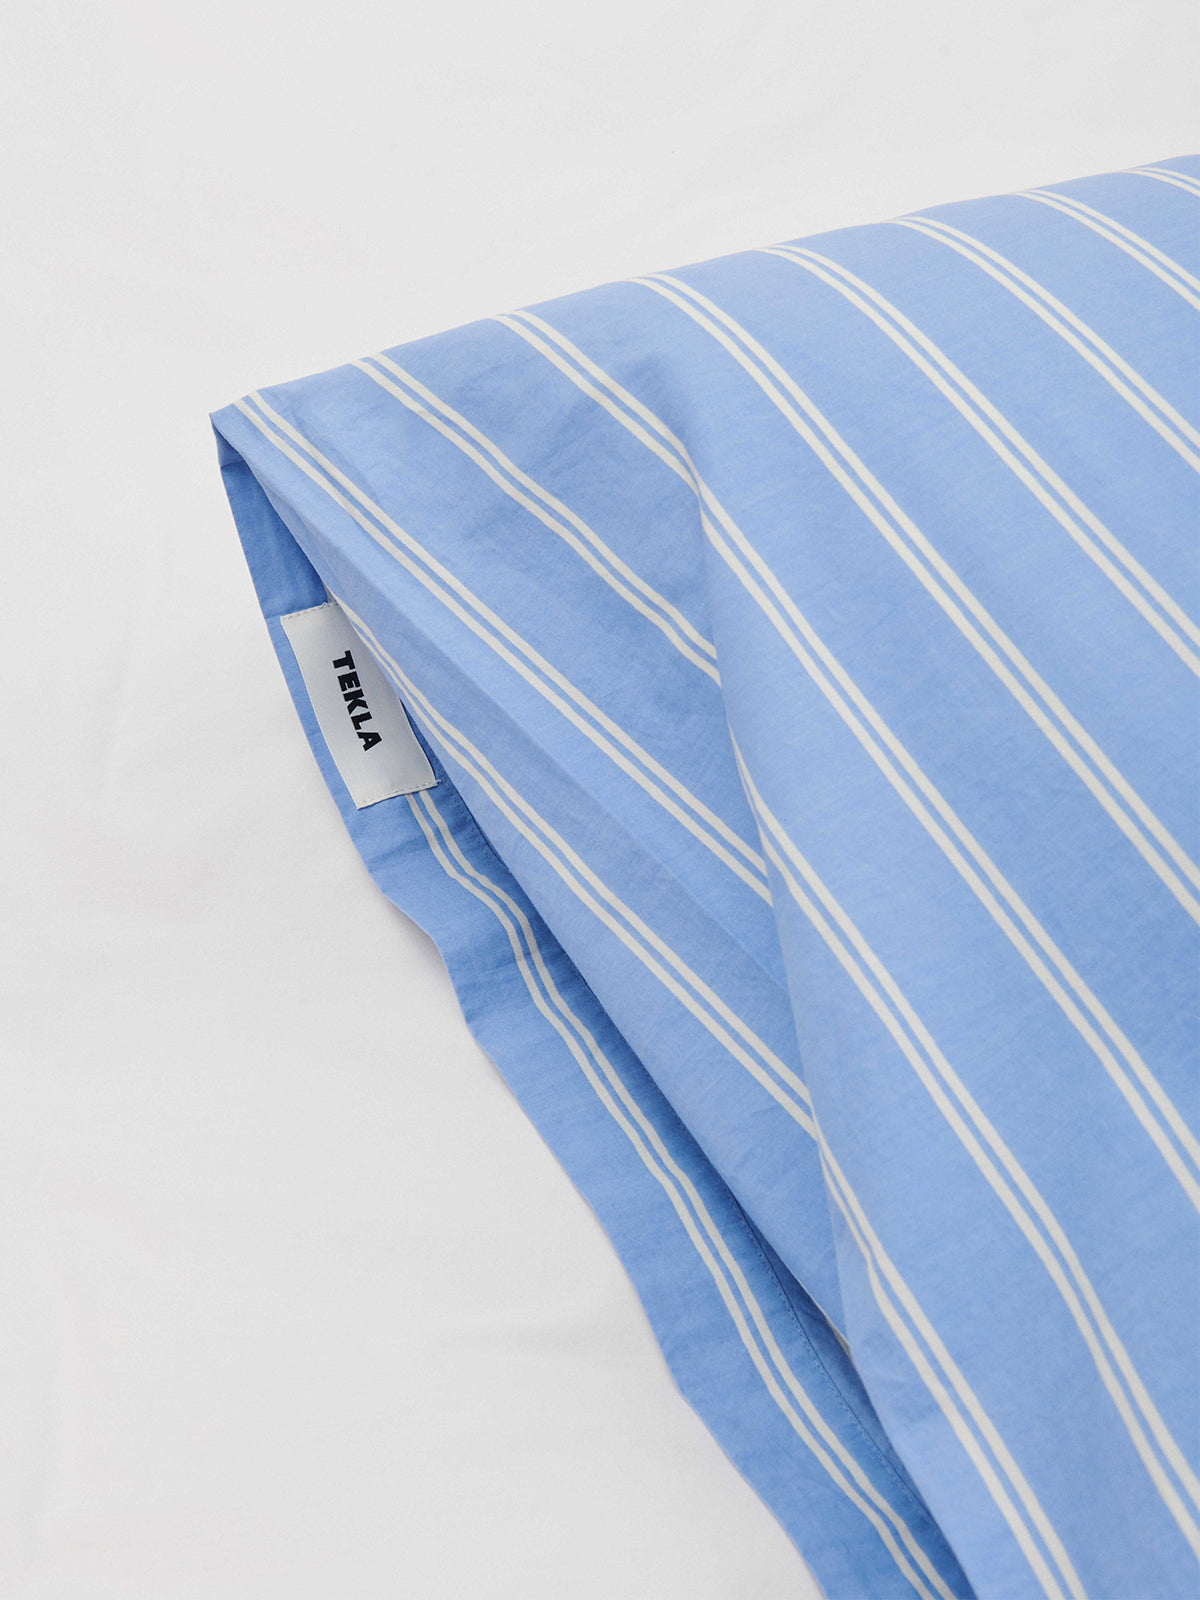 Percale Pillow Sham in Island Blue Stripes